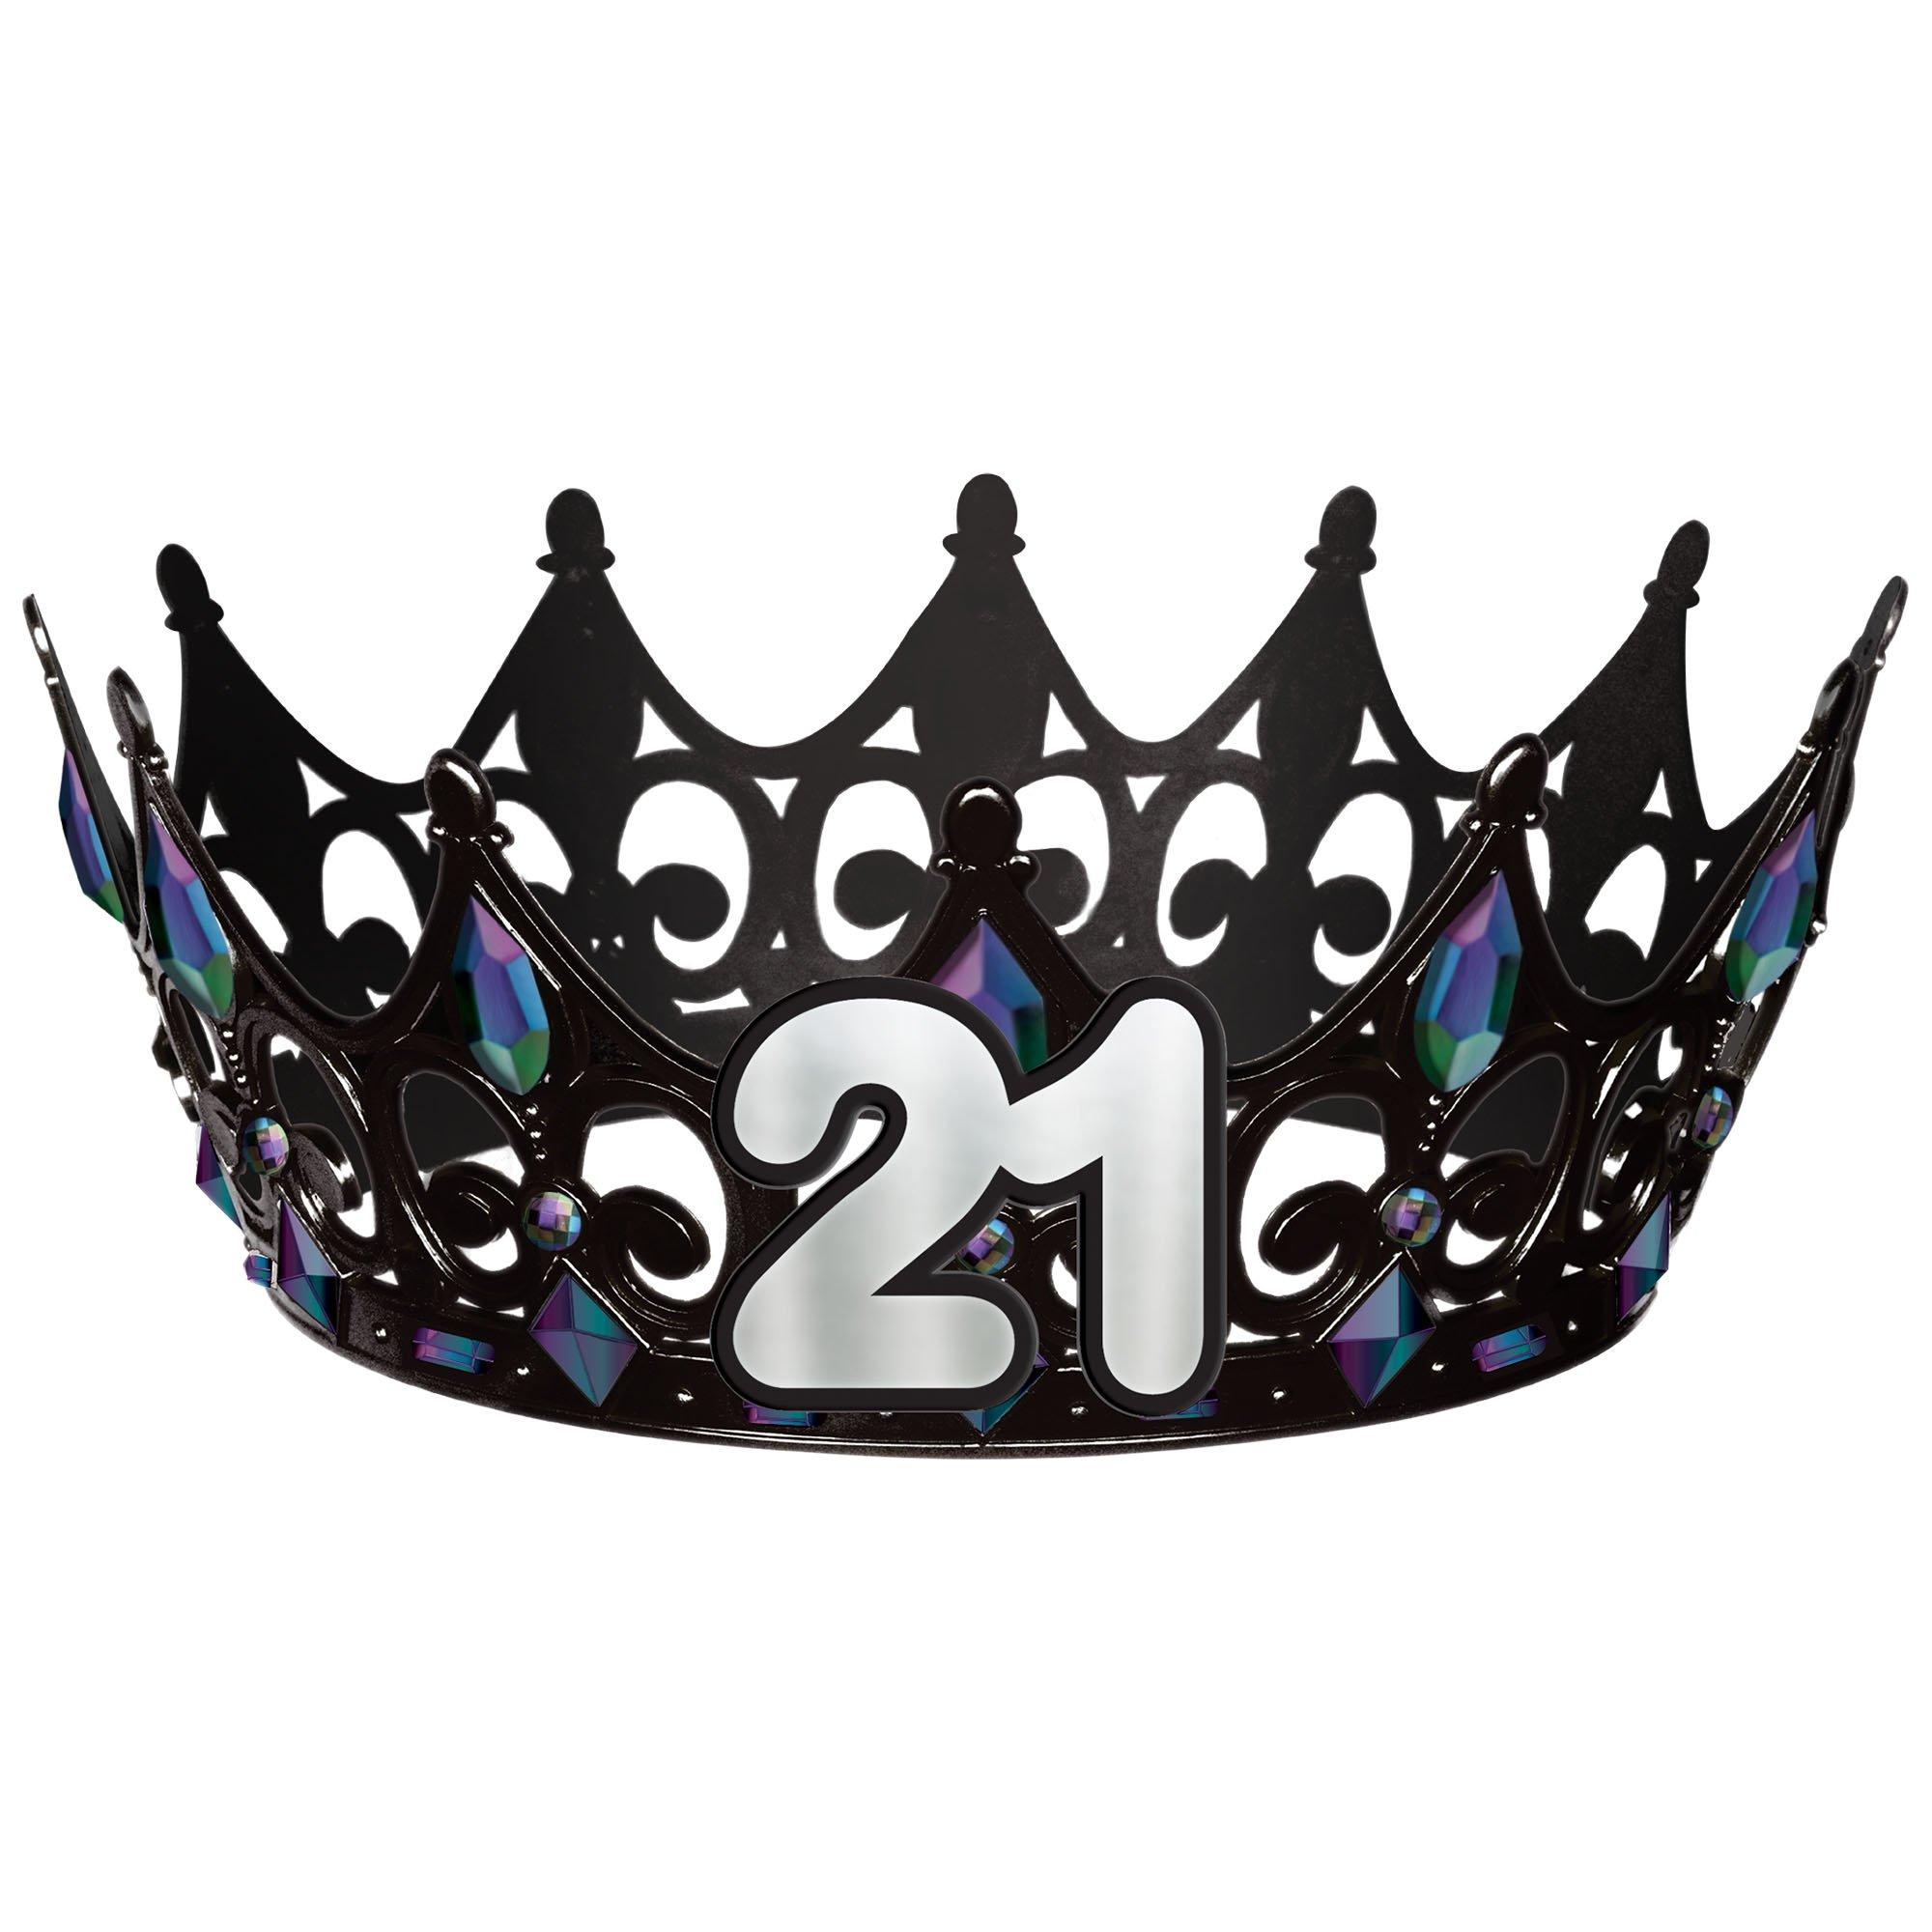 Finally 21 Jewel Crown